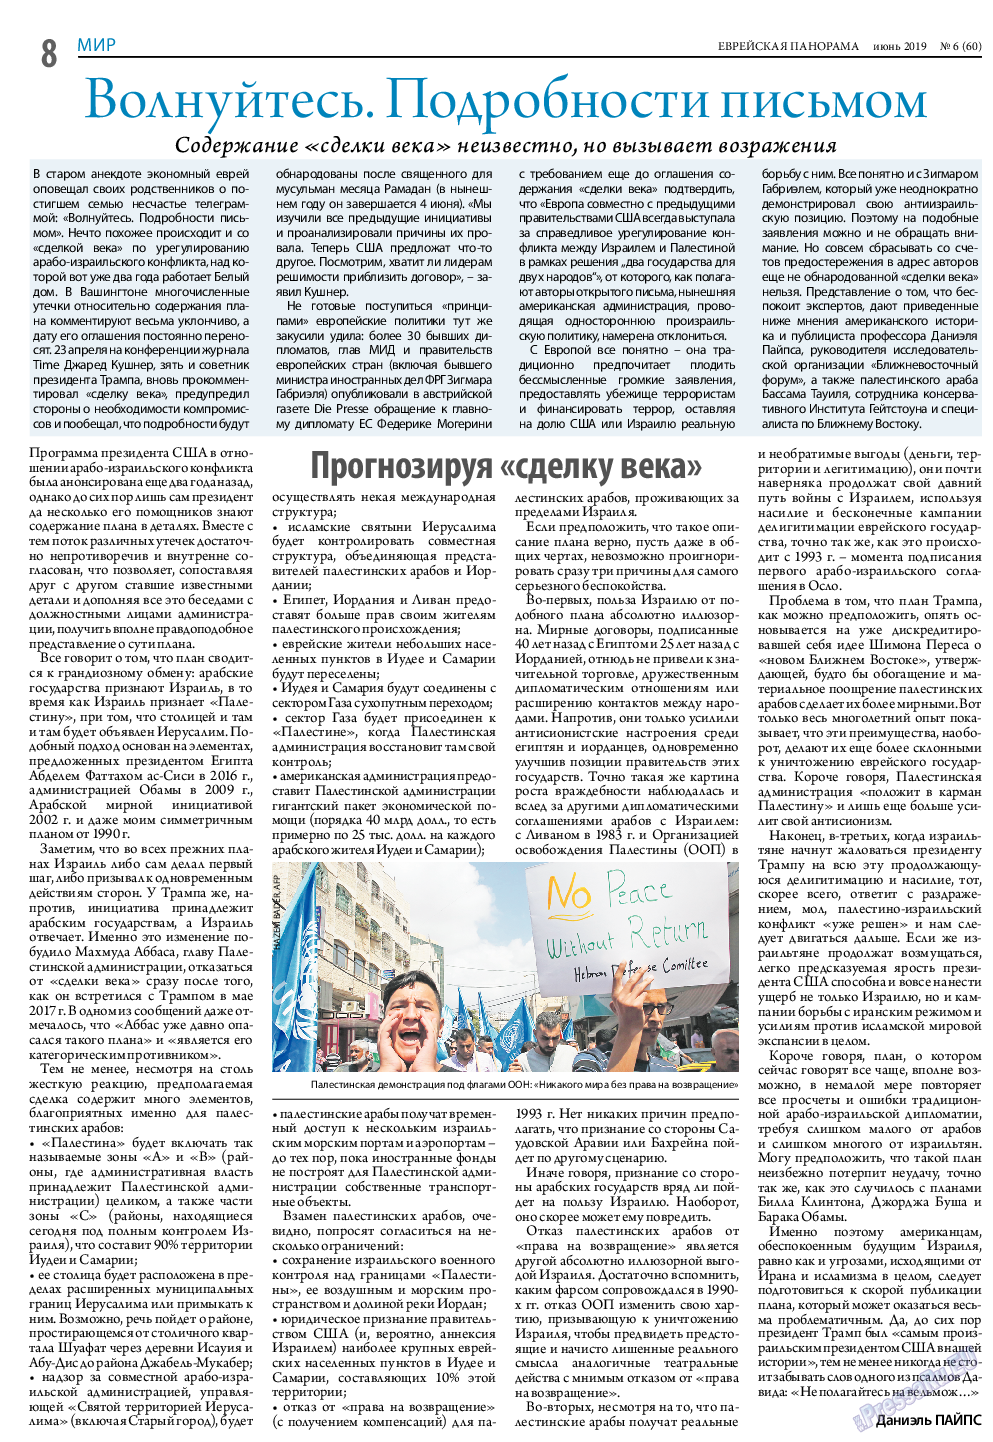 Еврейская панорама, газета. 2019 №6 стр.8